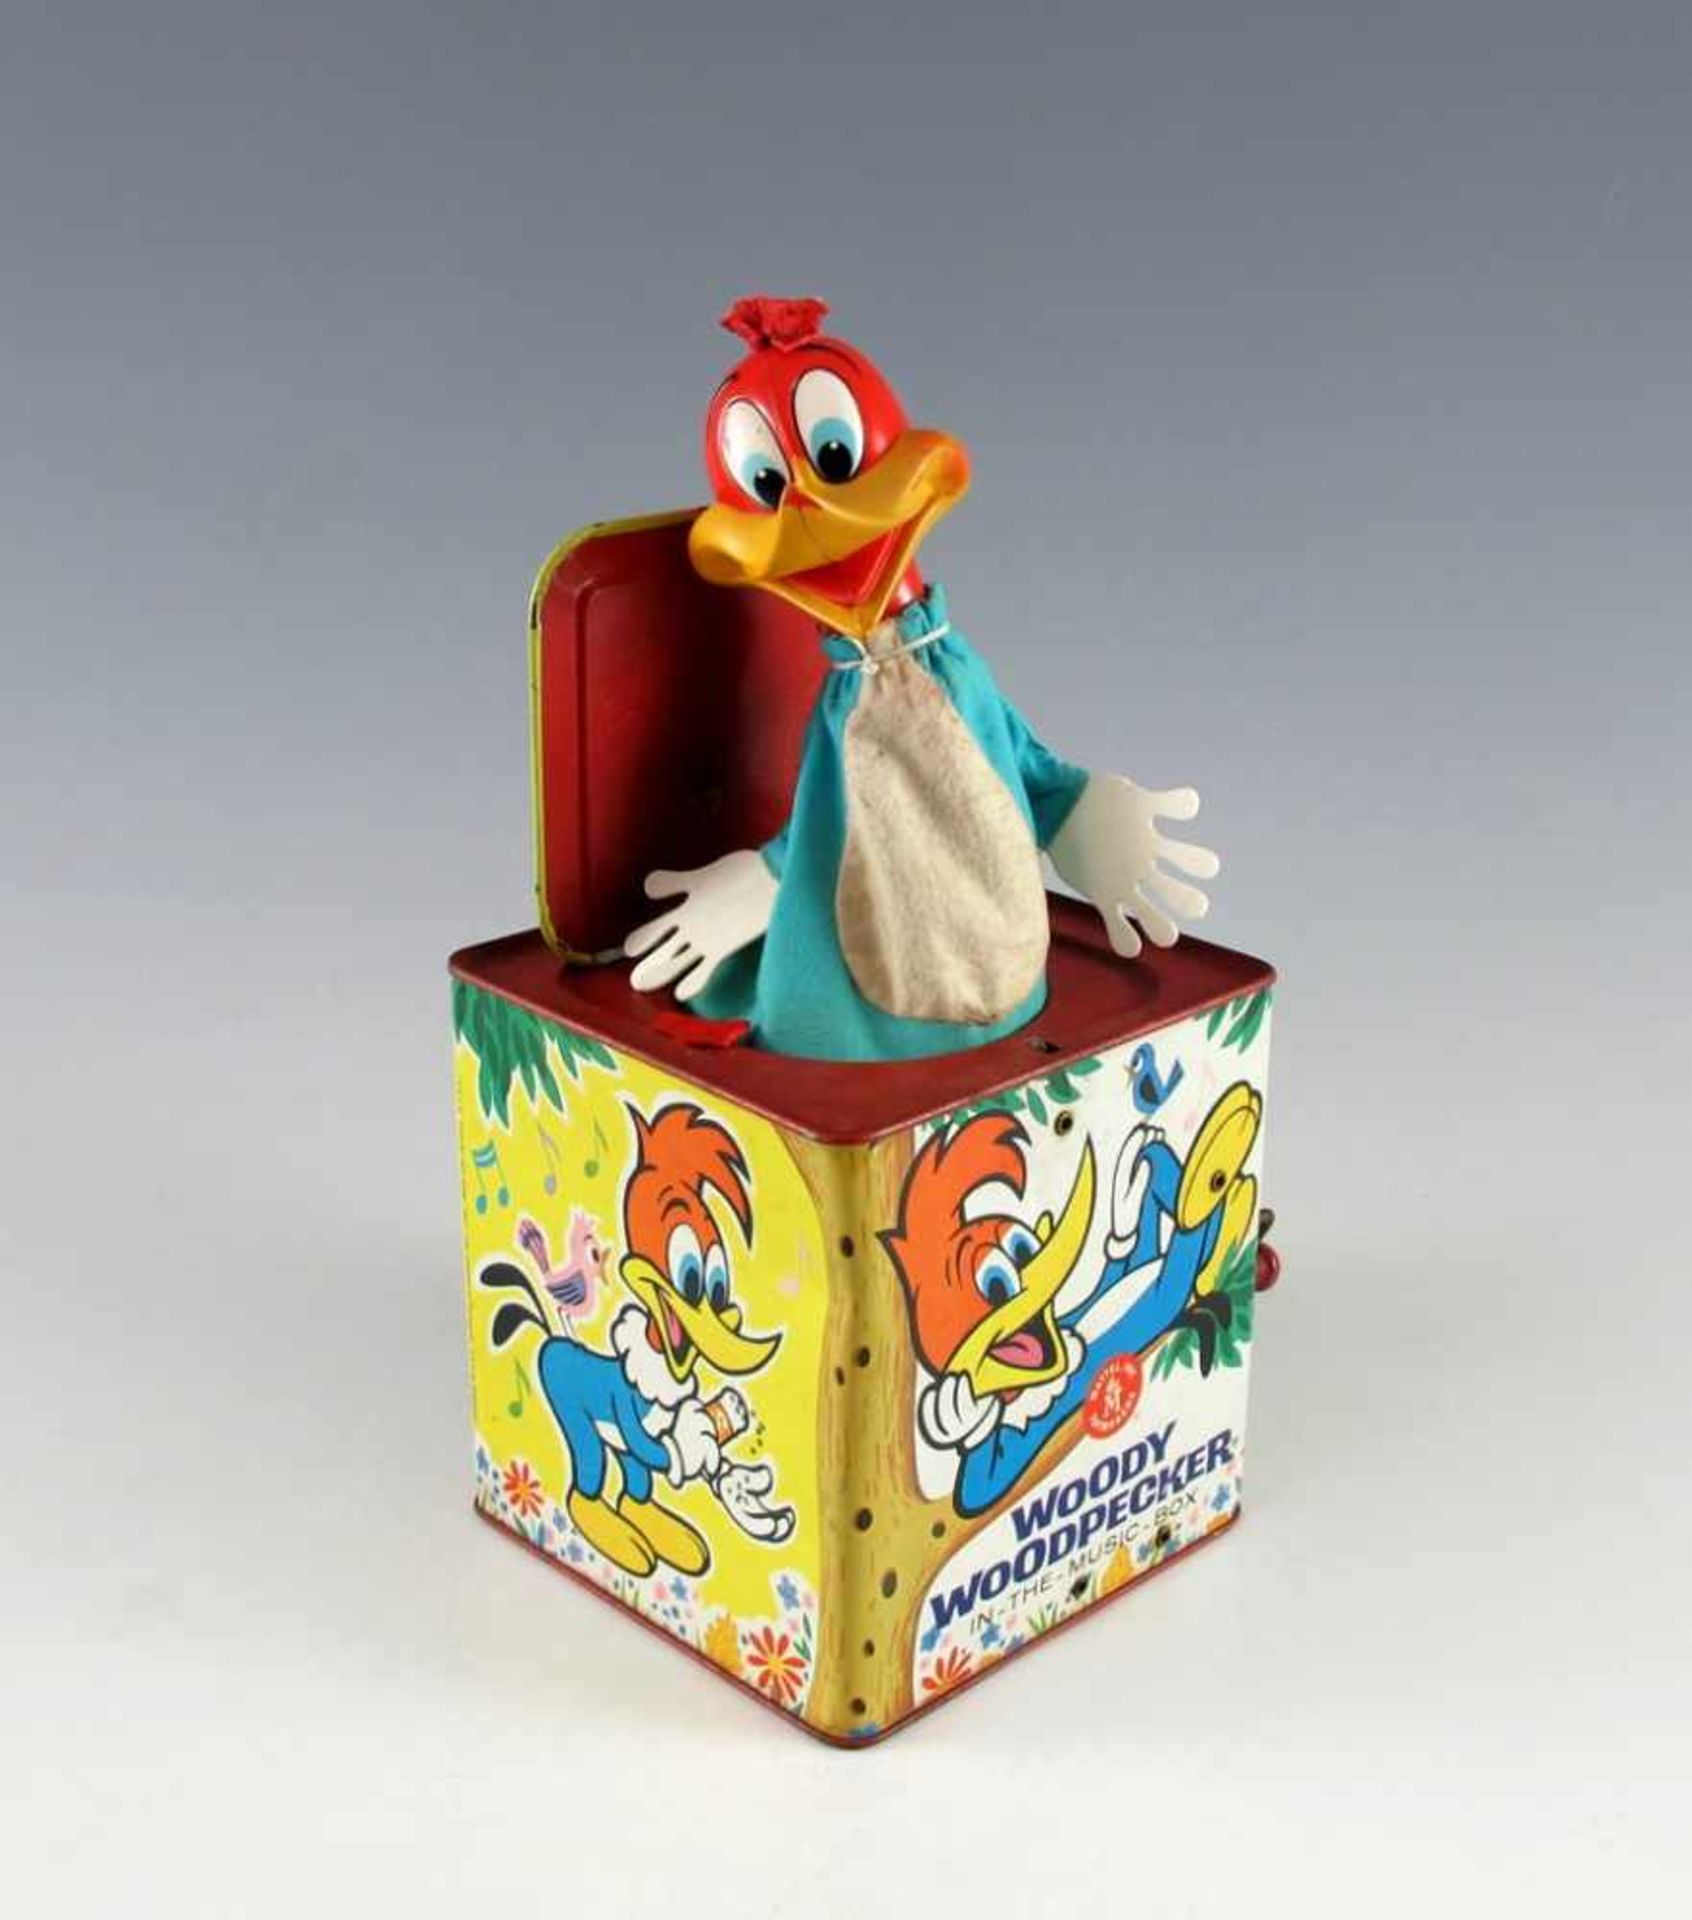 "Woody Woodpecker in the Music Box". Matty Mattel Toymakers, 1960er Jahre. Bemalte Blechdose, 14 x